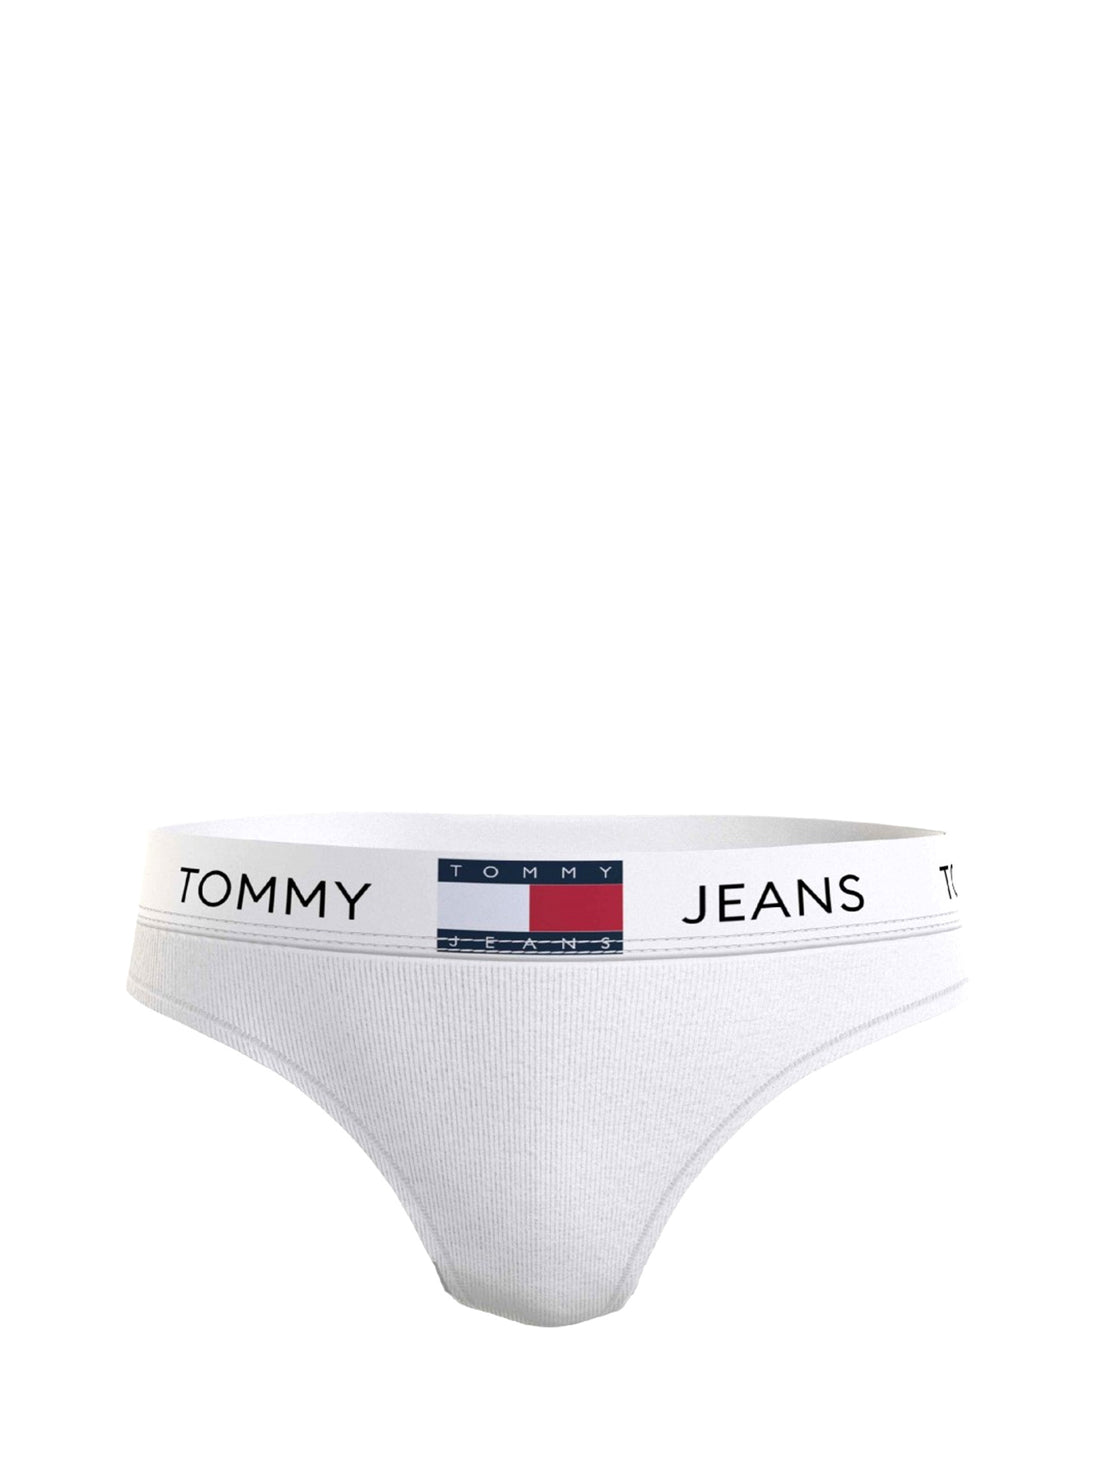 Perizomi Bianco Tommy Hilfiger Underwear